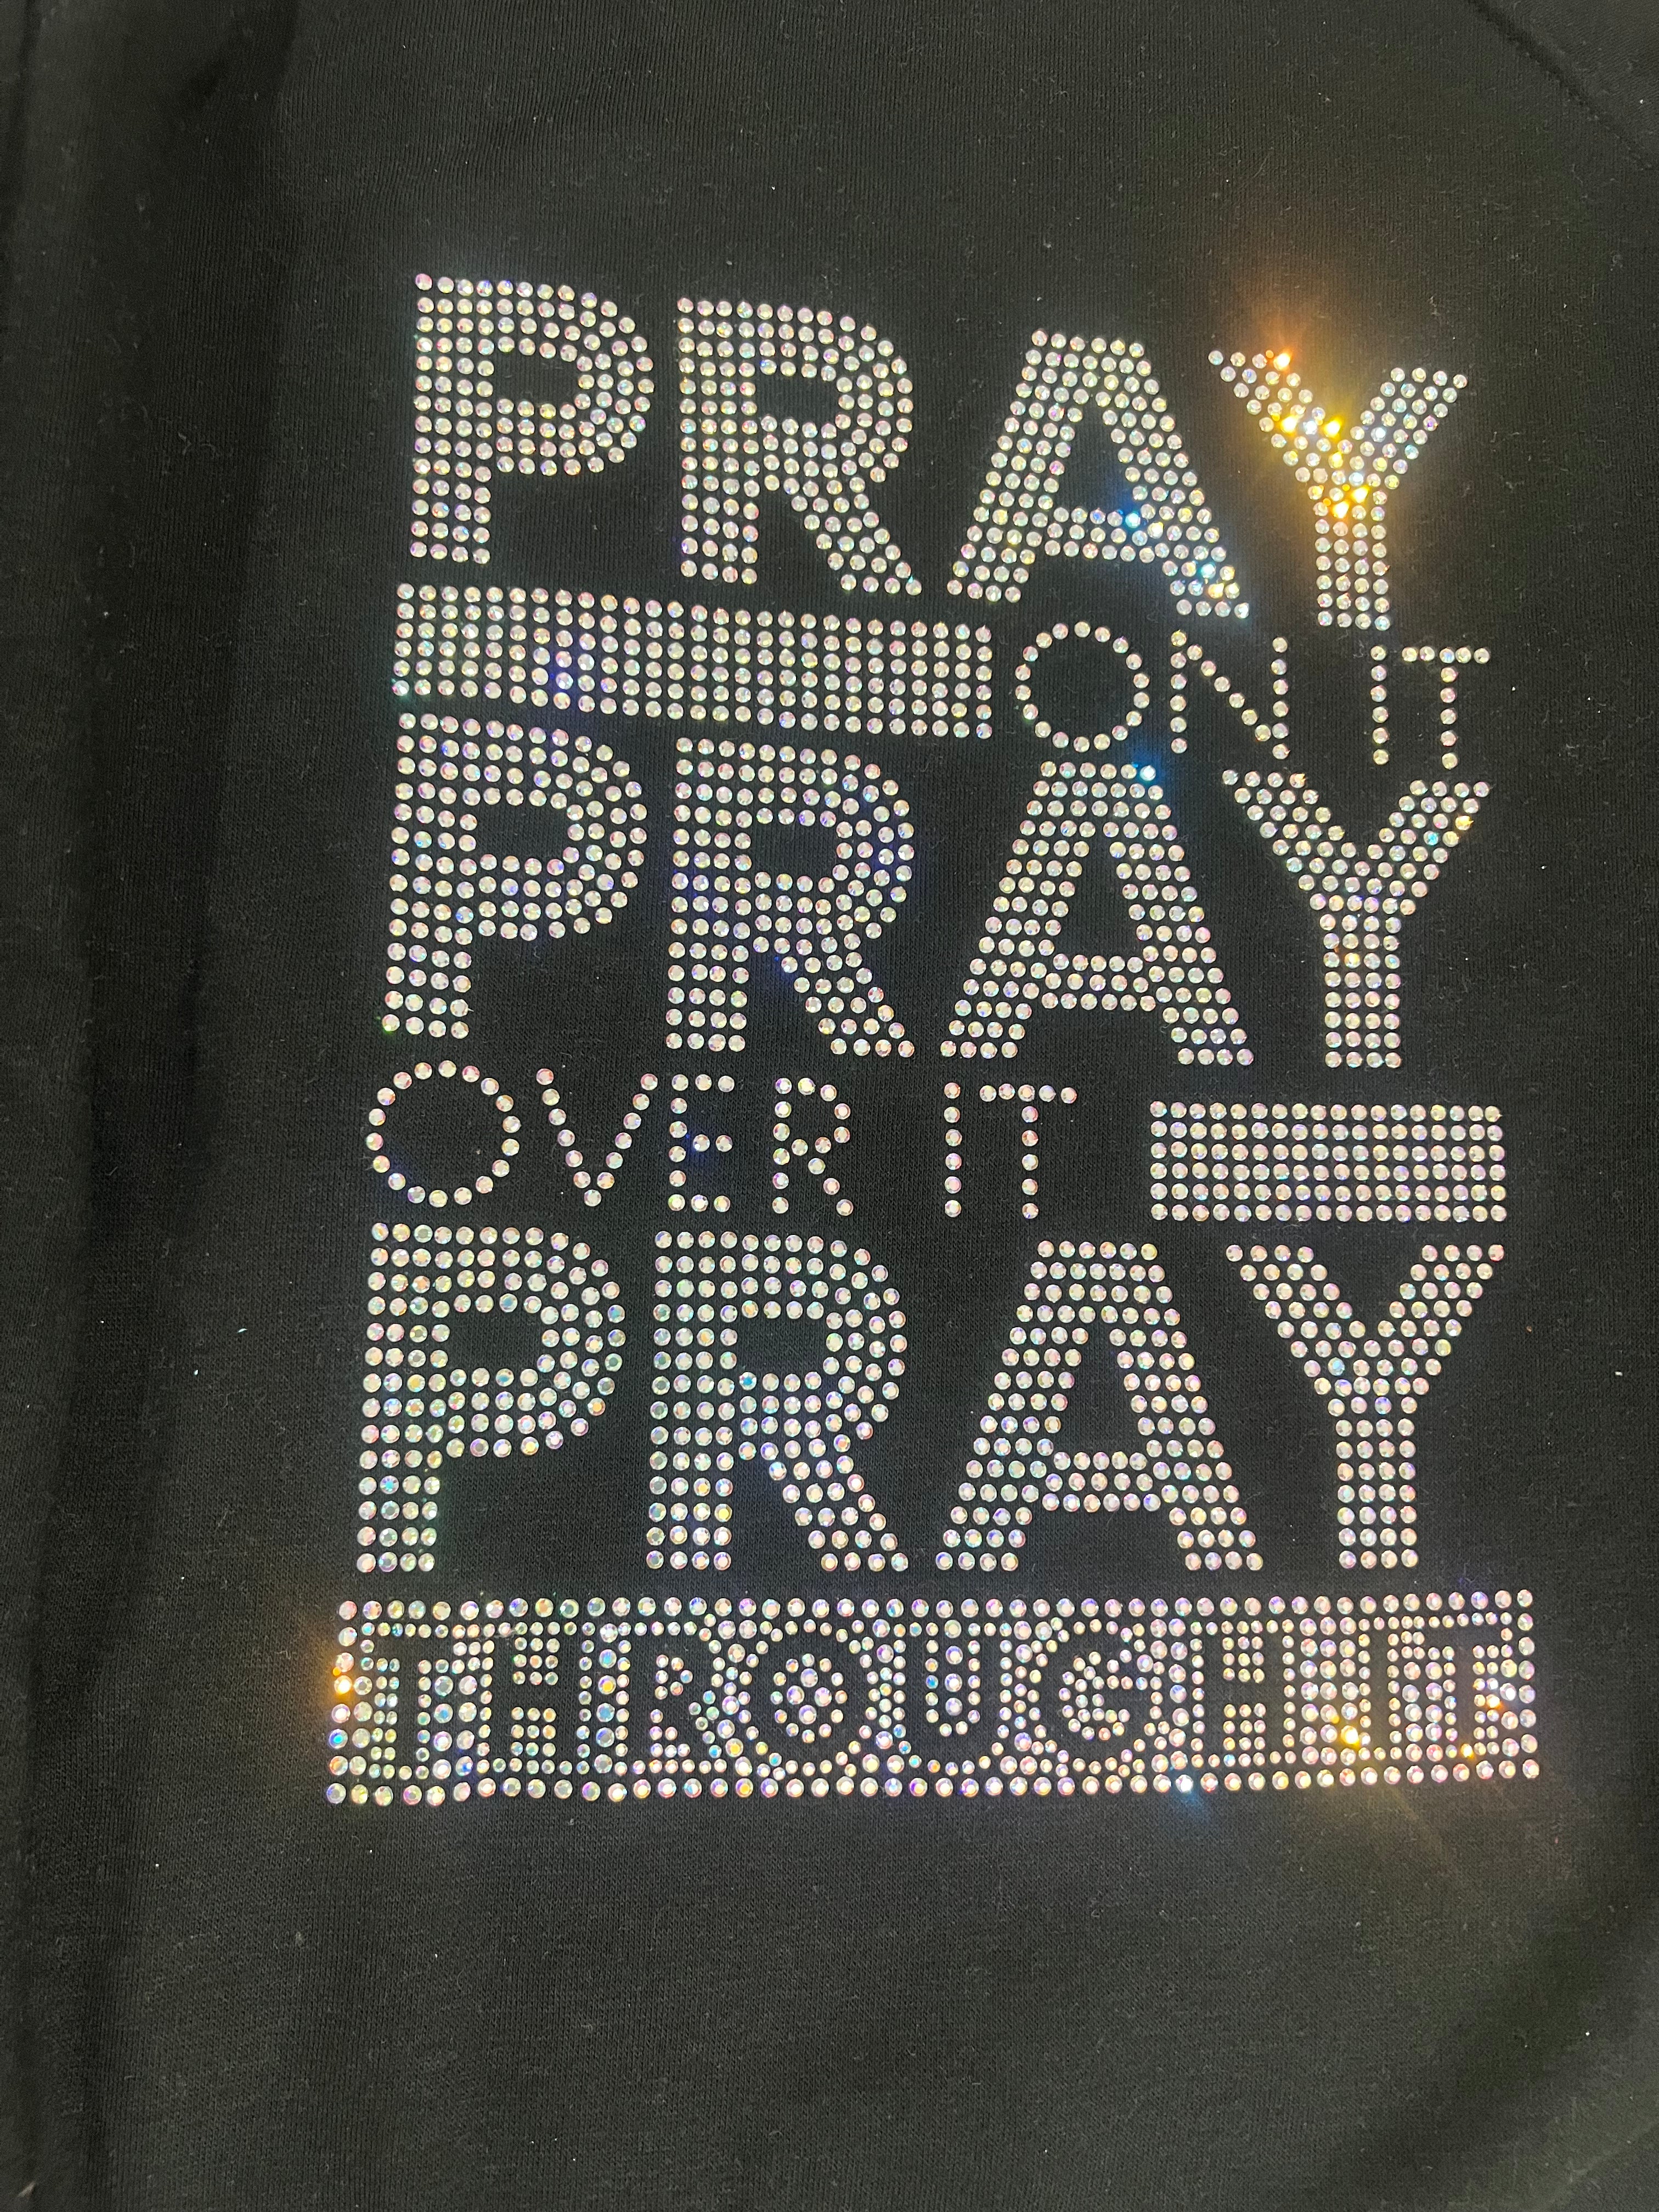 Pray On It! Pray Over It! Pray Through it!